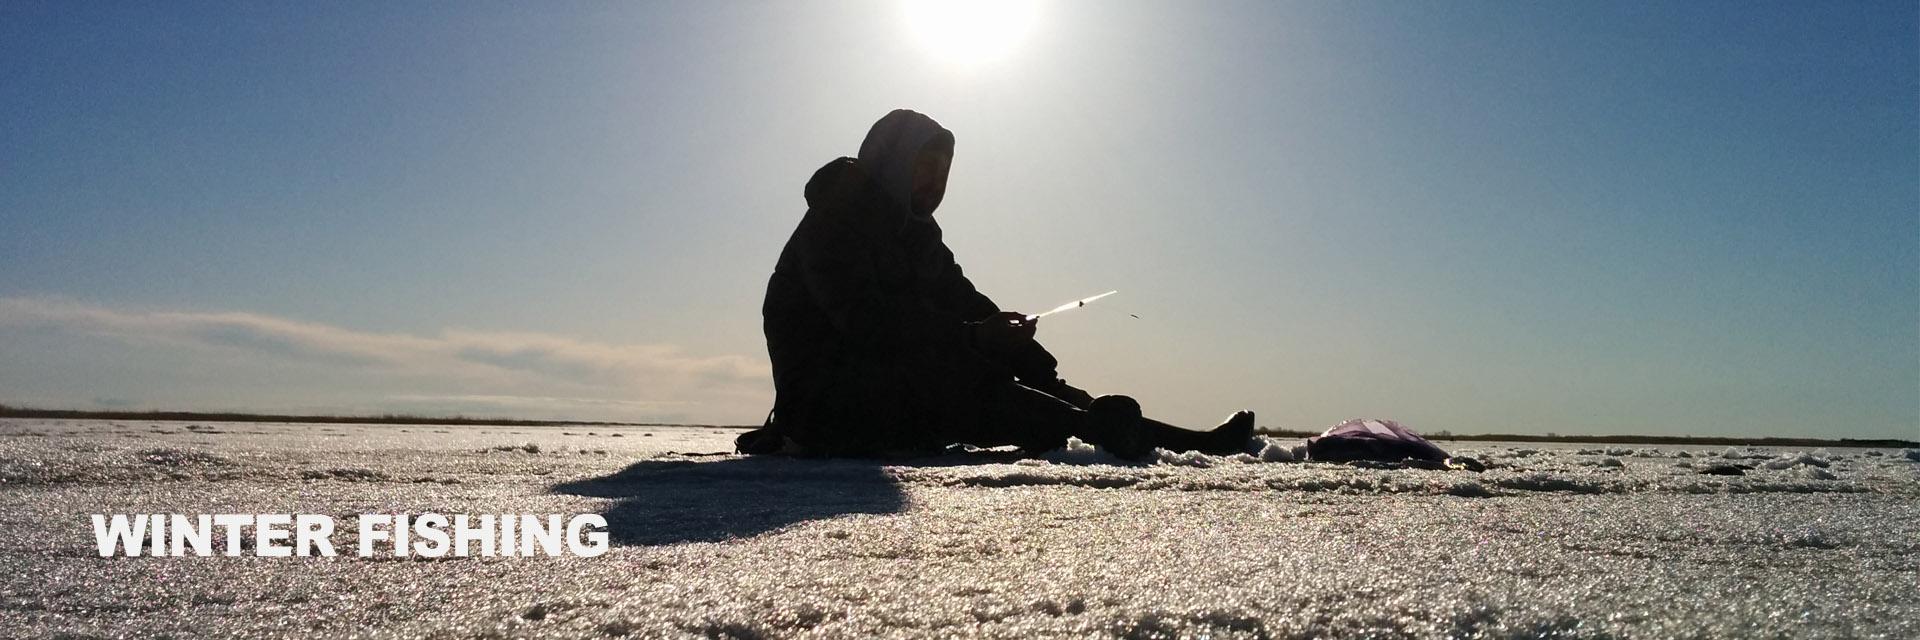 Winter fishing in Mongolia